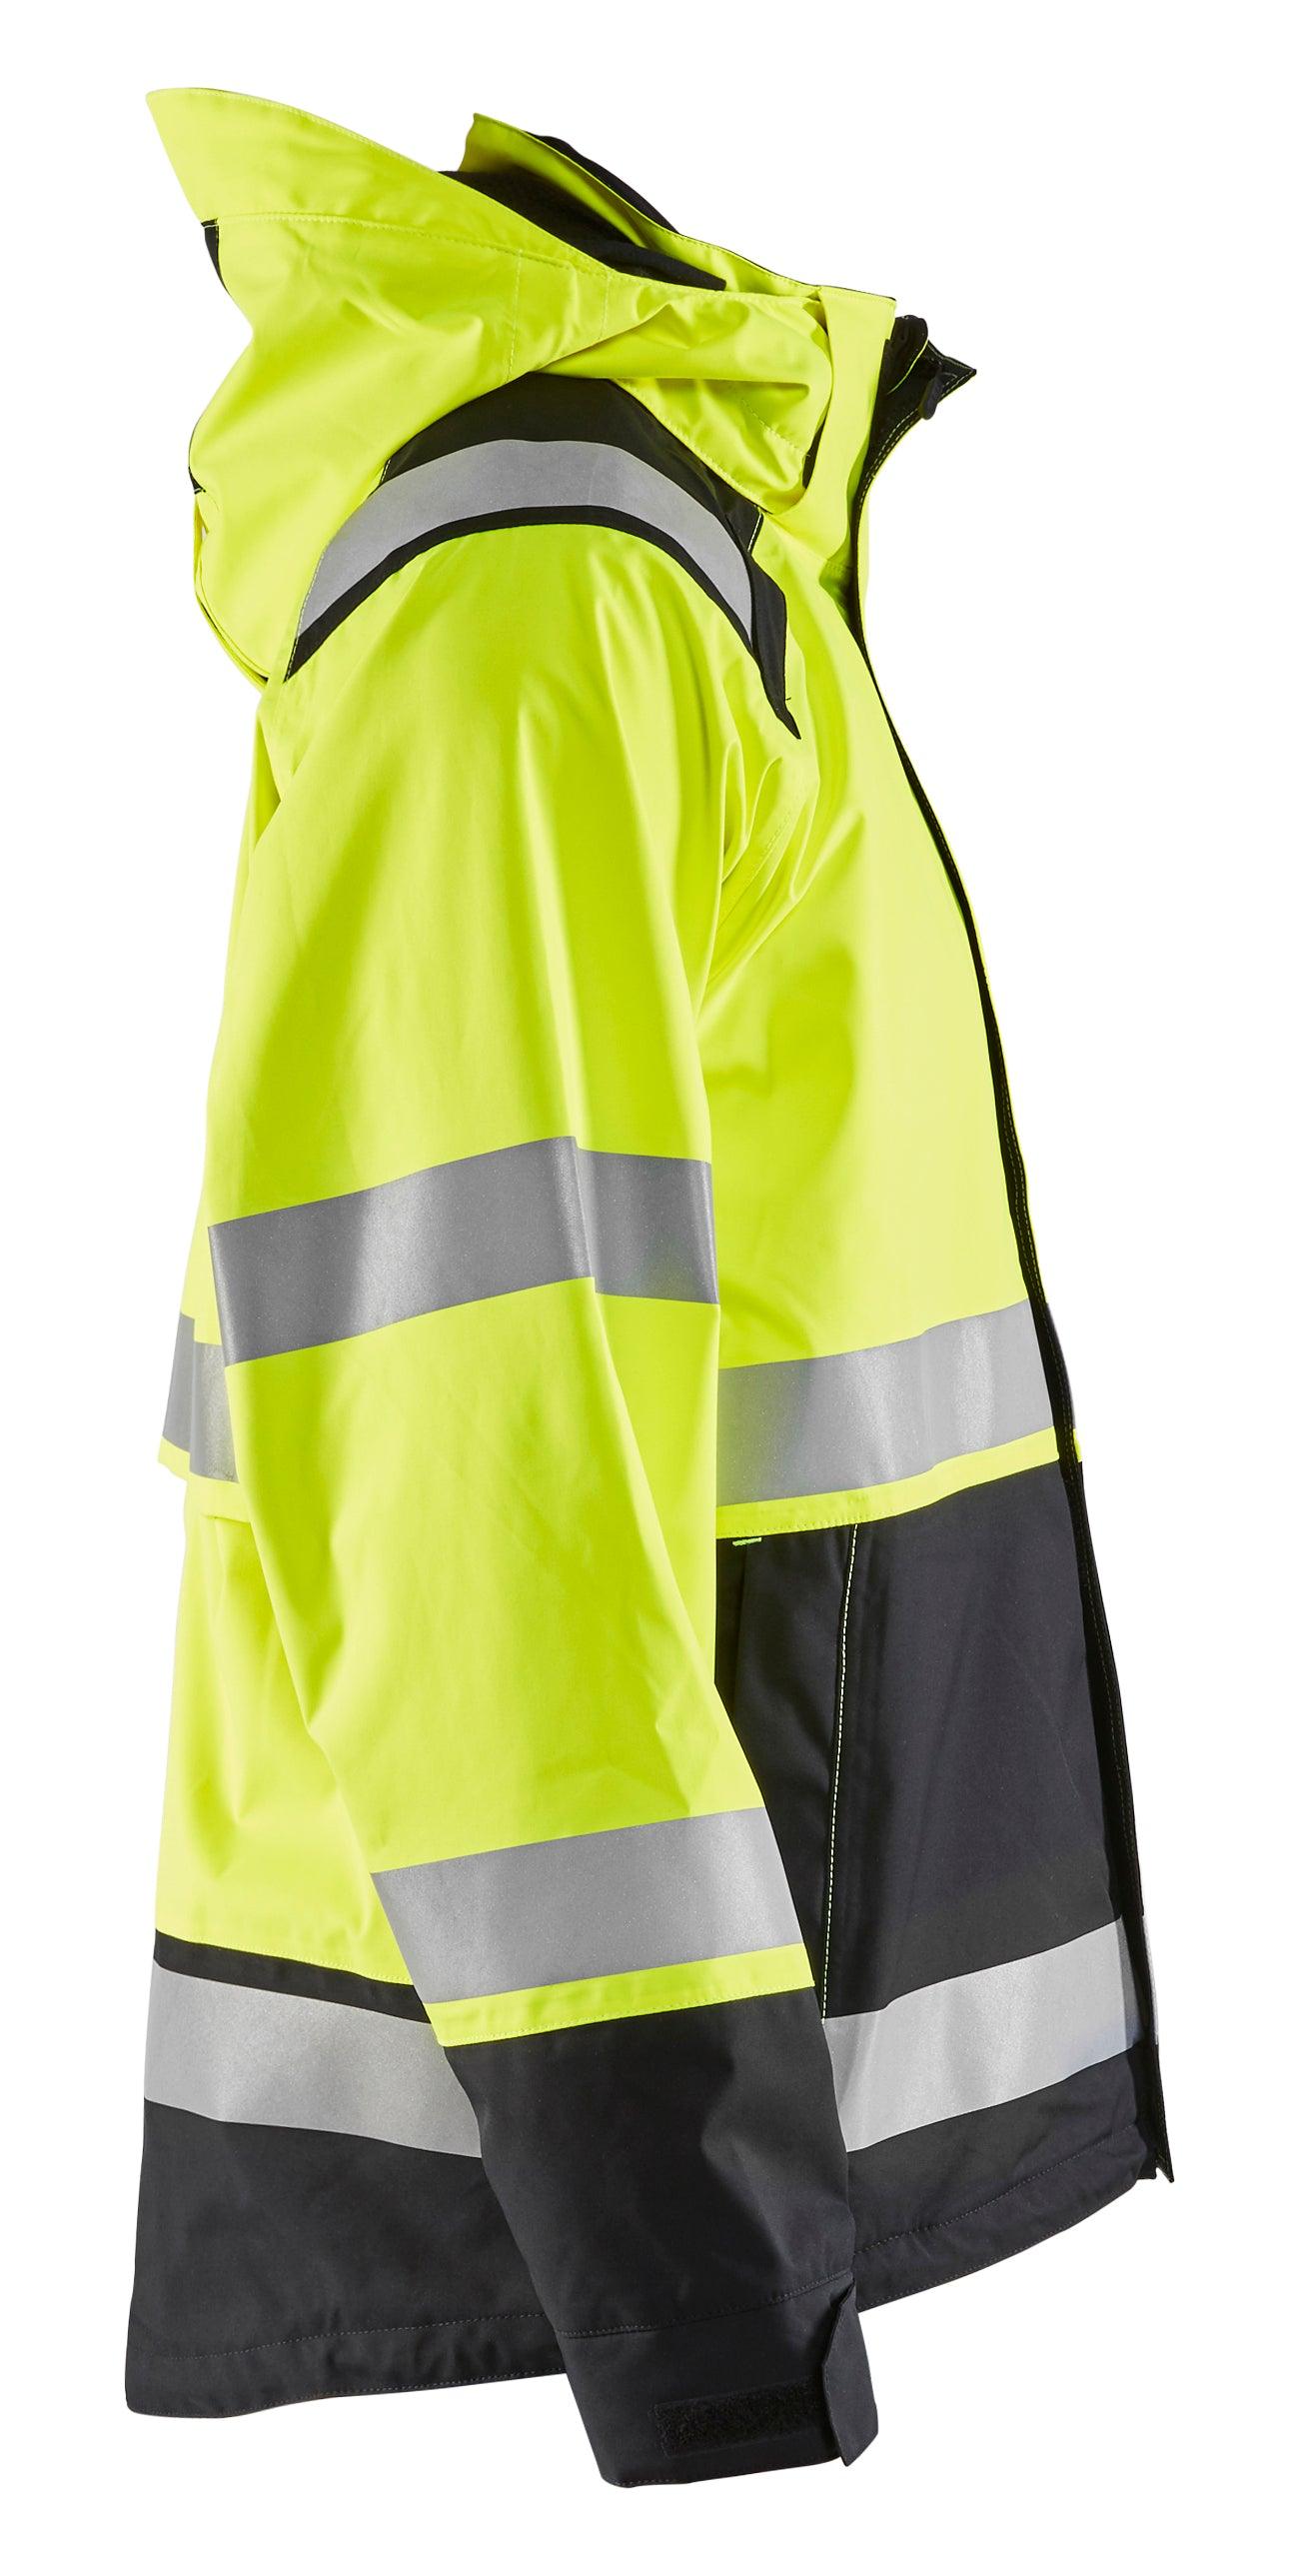 Blaklader 4787 Hi-Vis Premium Waterproof Shell Jacket - Yellow Hi-Vis/Black - Trusted Gear Company LLC